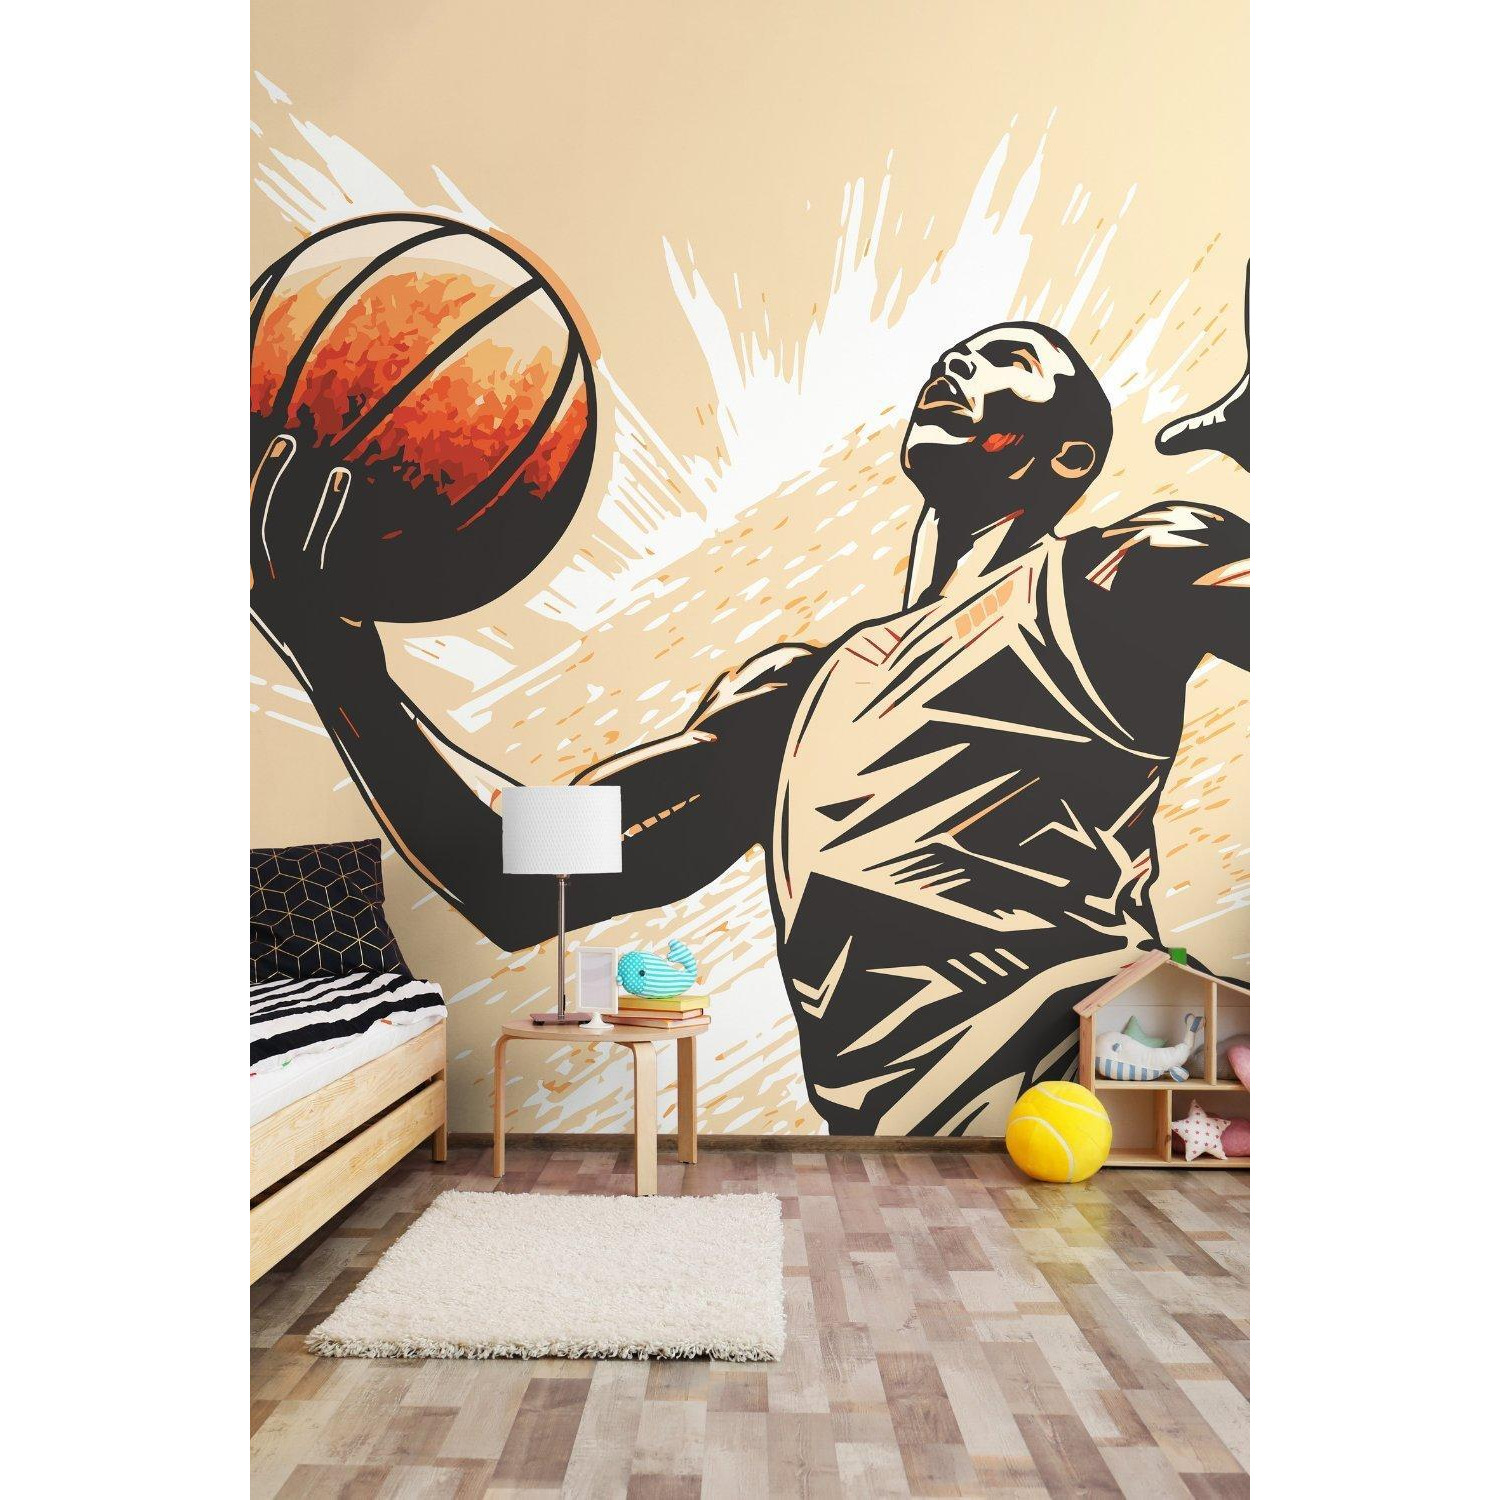 Graphic Basketball Player Orange Matt Smooth Paste the Wall 300cm wide x 240cm high - image 1